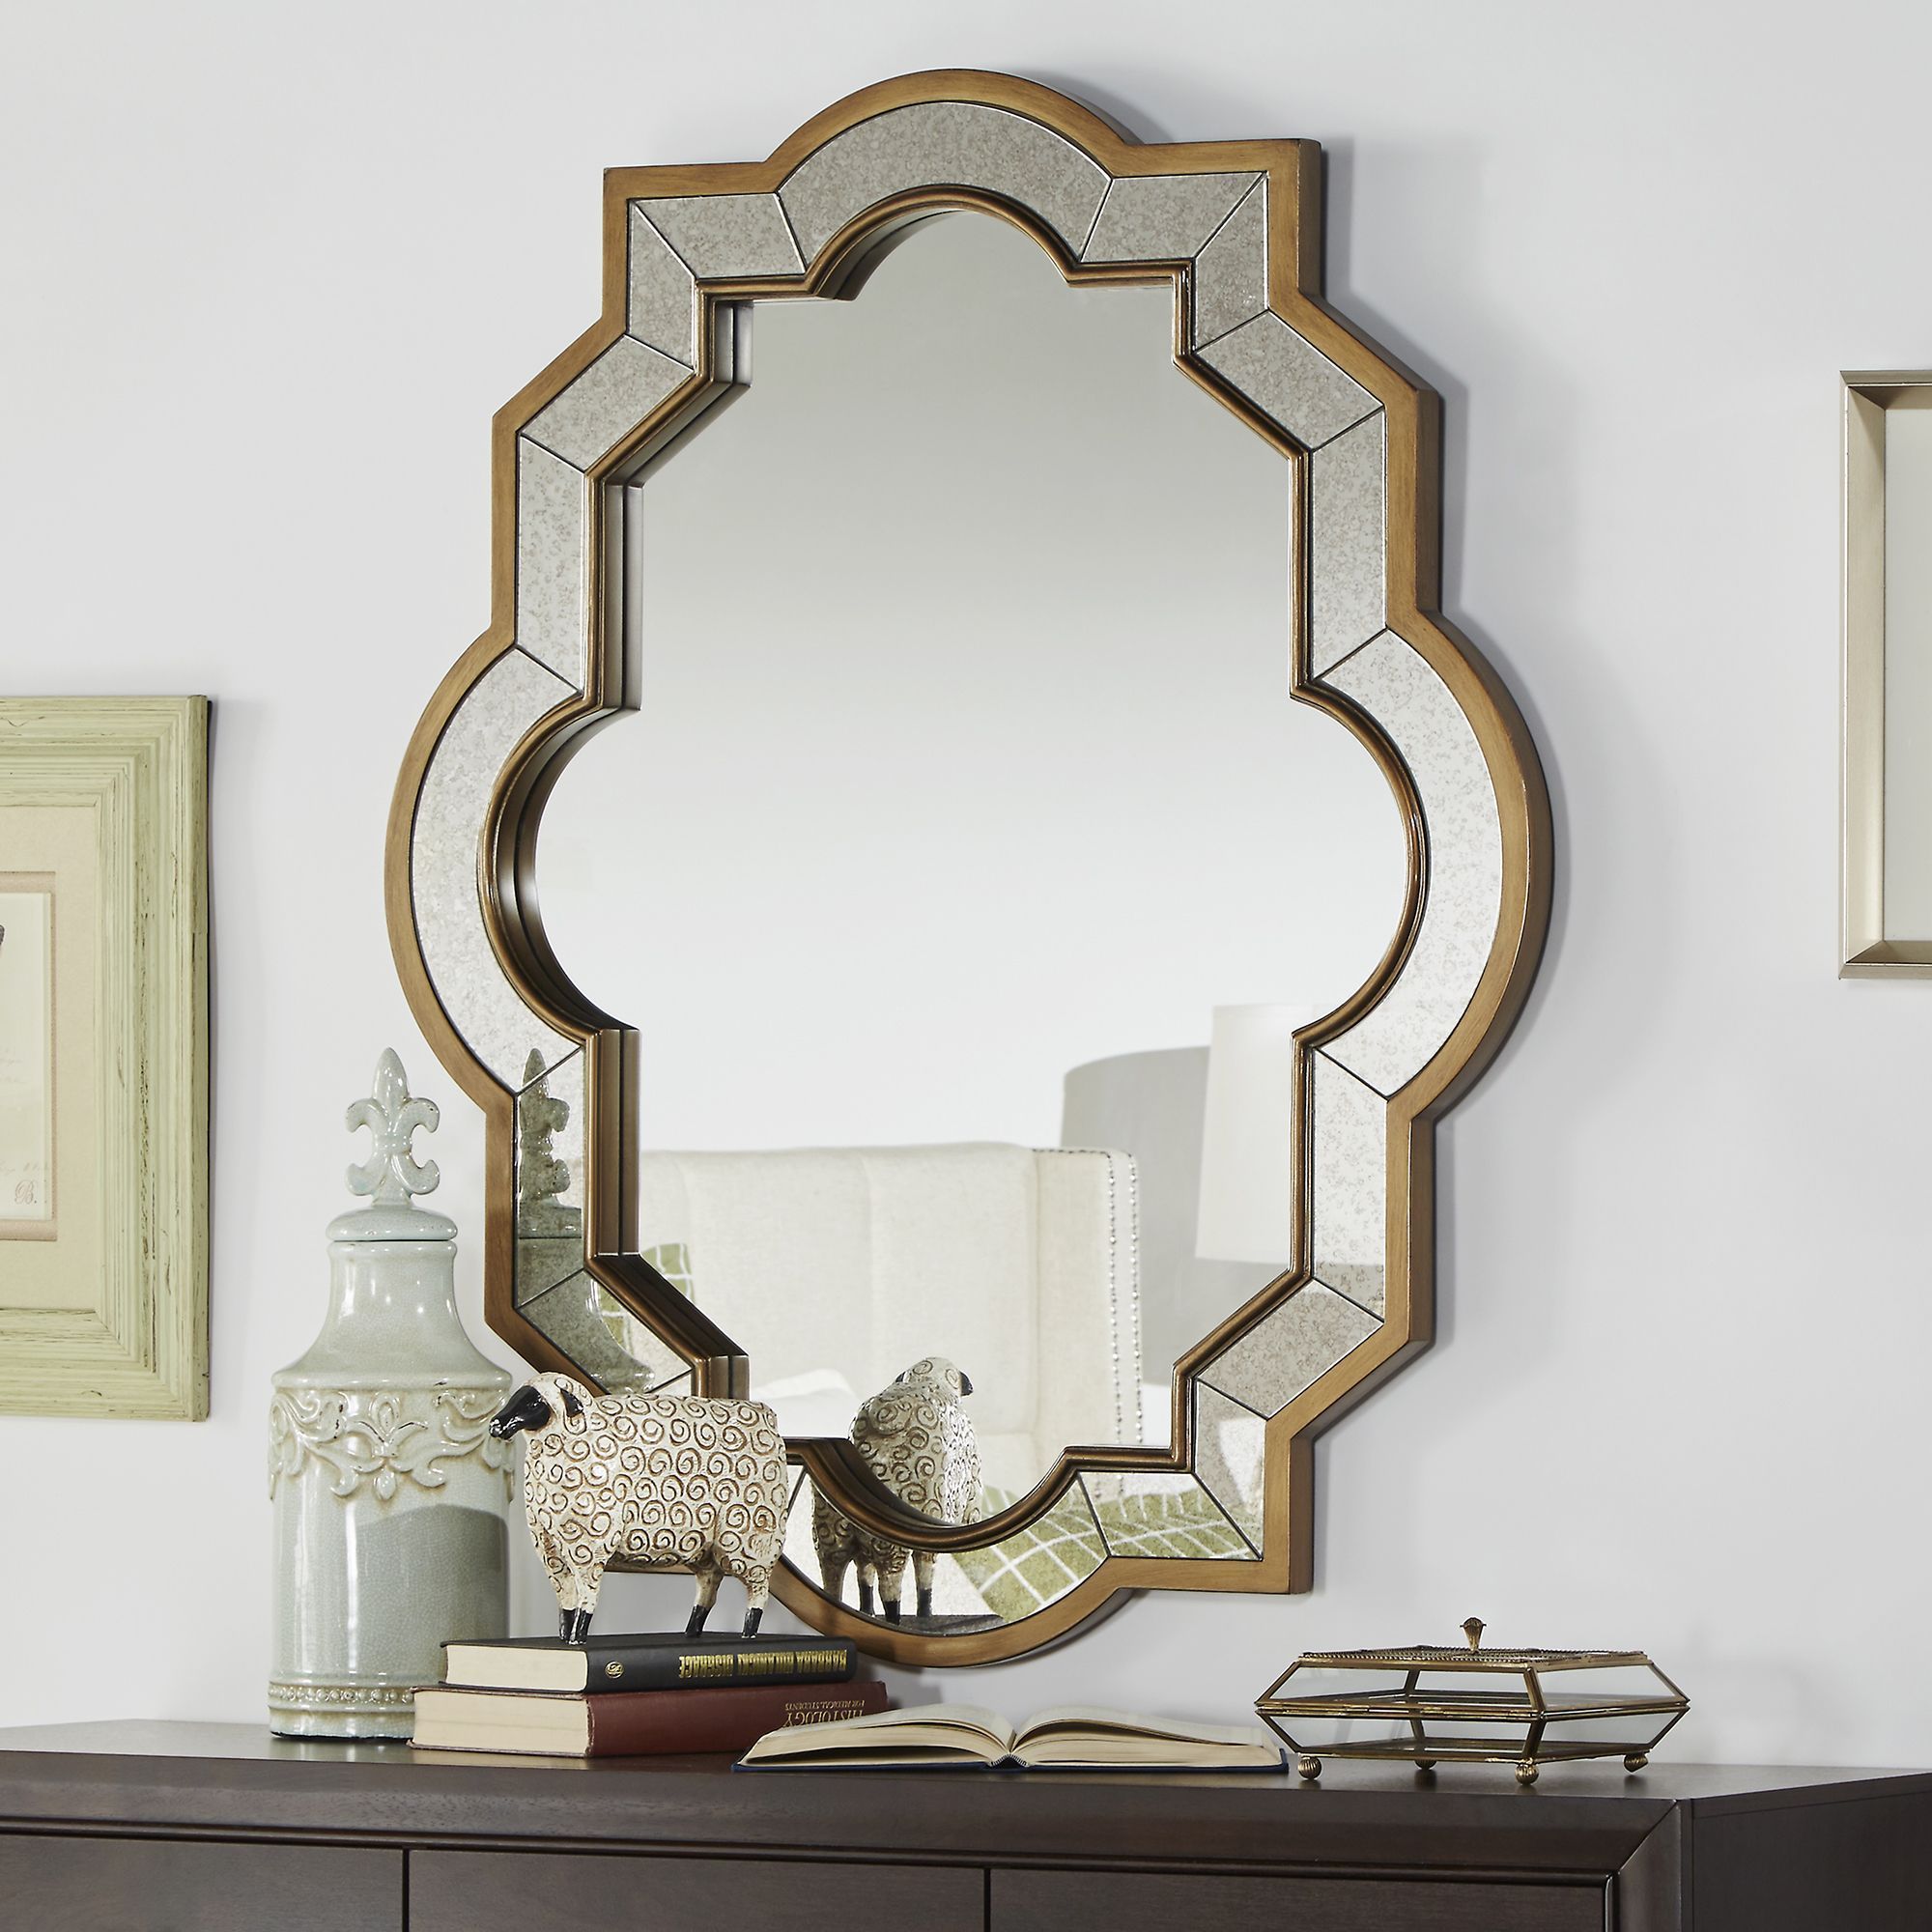 Mirrors | Mirror Wall, Decorative Bathroom Mirrors, Mirror Wall Decor Inside Booth Reclaimed Wall Mirrors Accent (Photo 3 of 15)